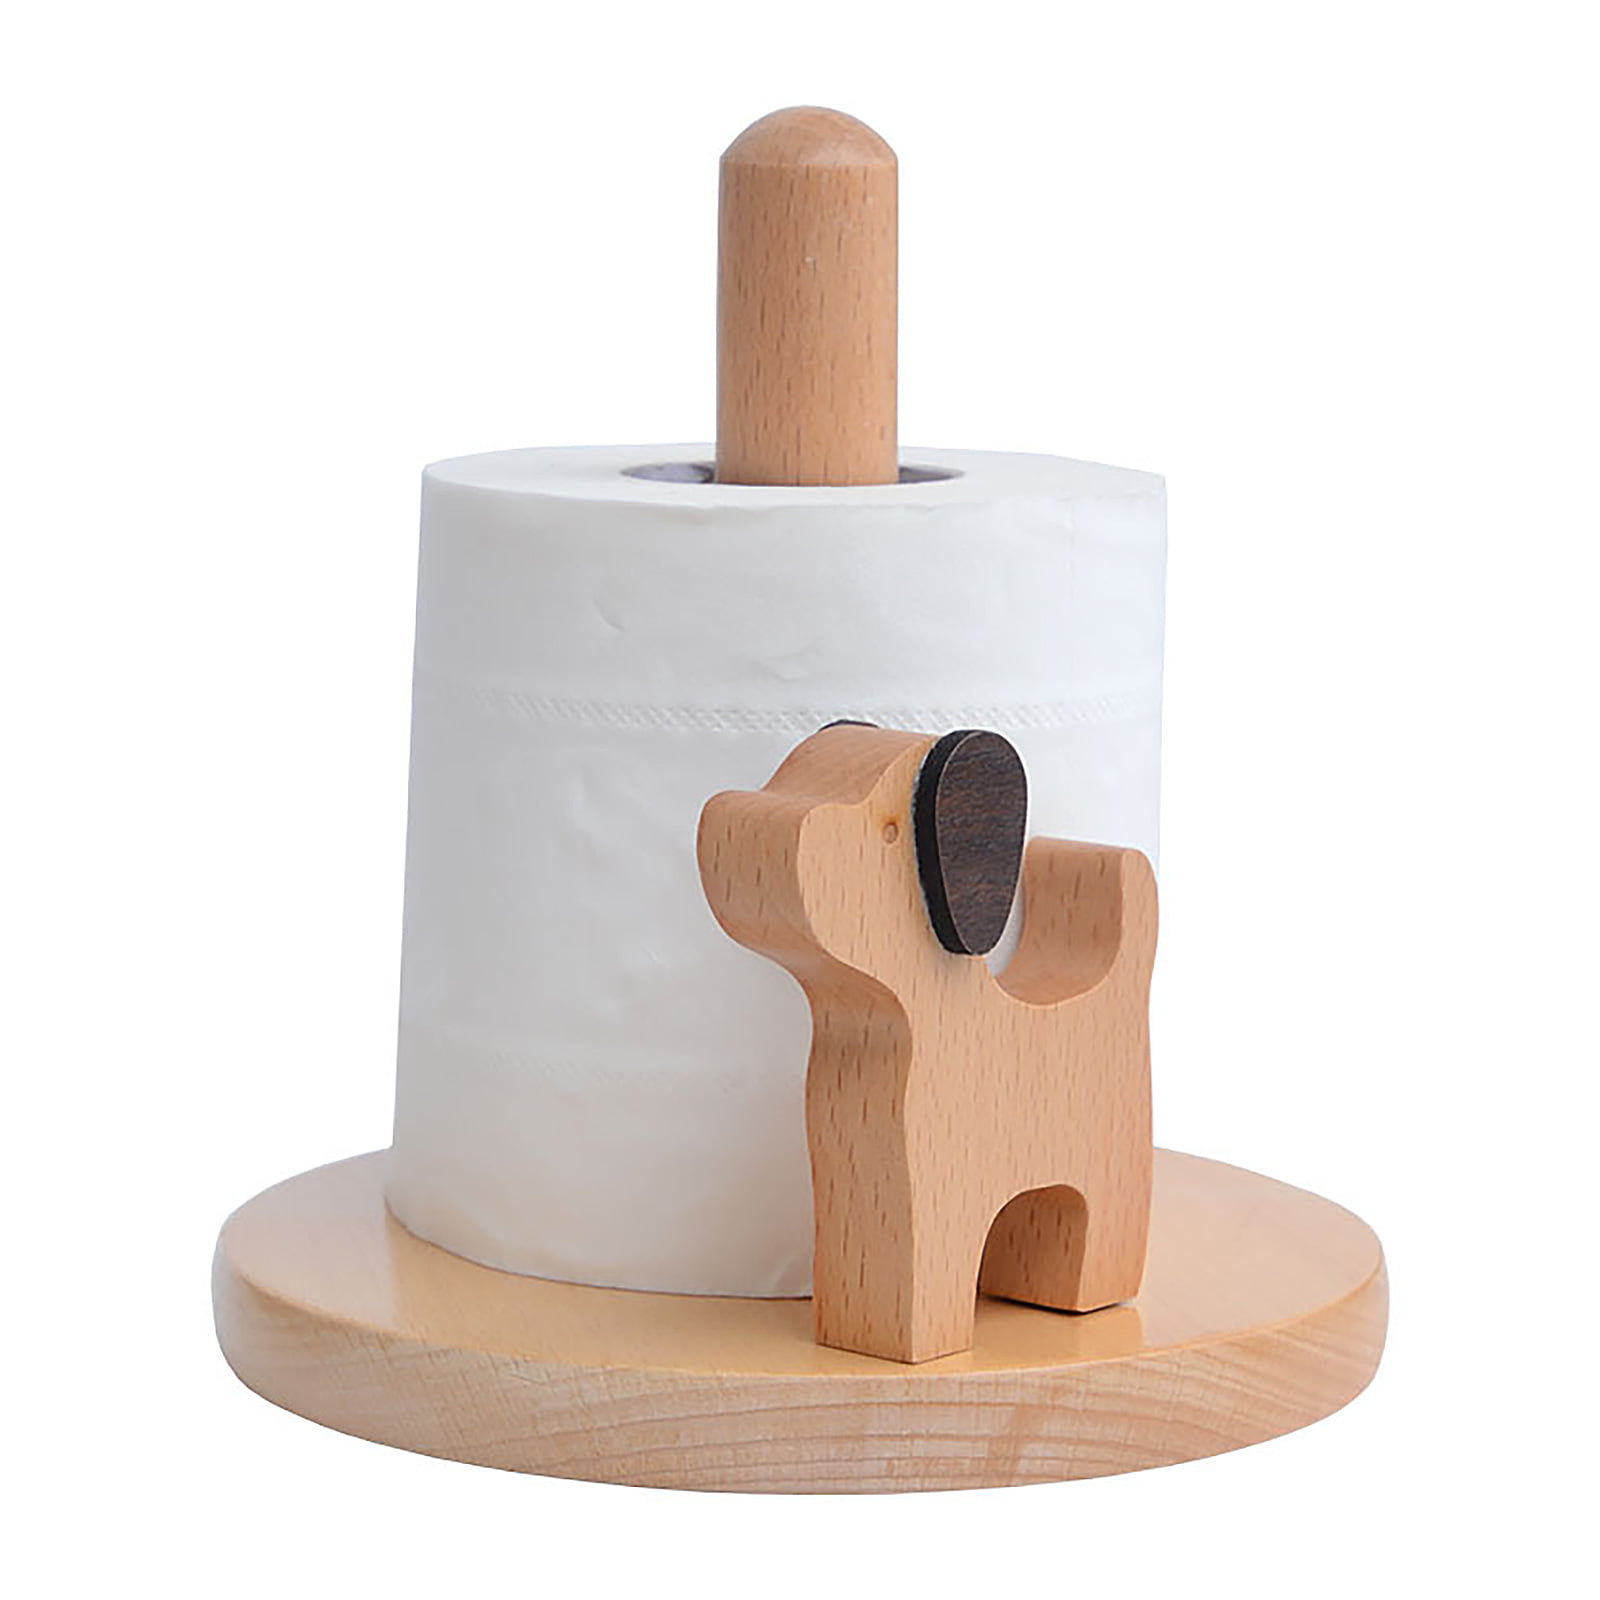 Smart Design Wood Paper Towel Holder - Fits Standard Size Paper Towel Rolls - Kitchen Countertop Stand, Bathroom Organizer RA